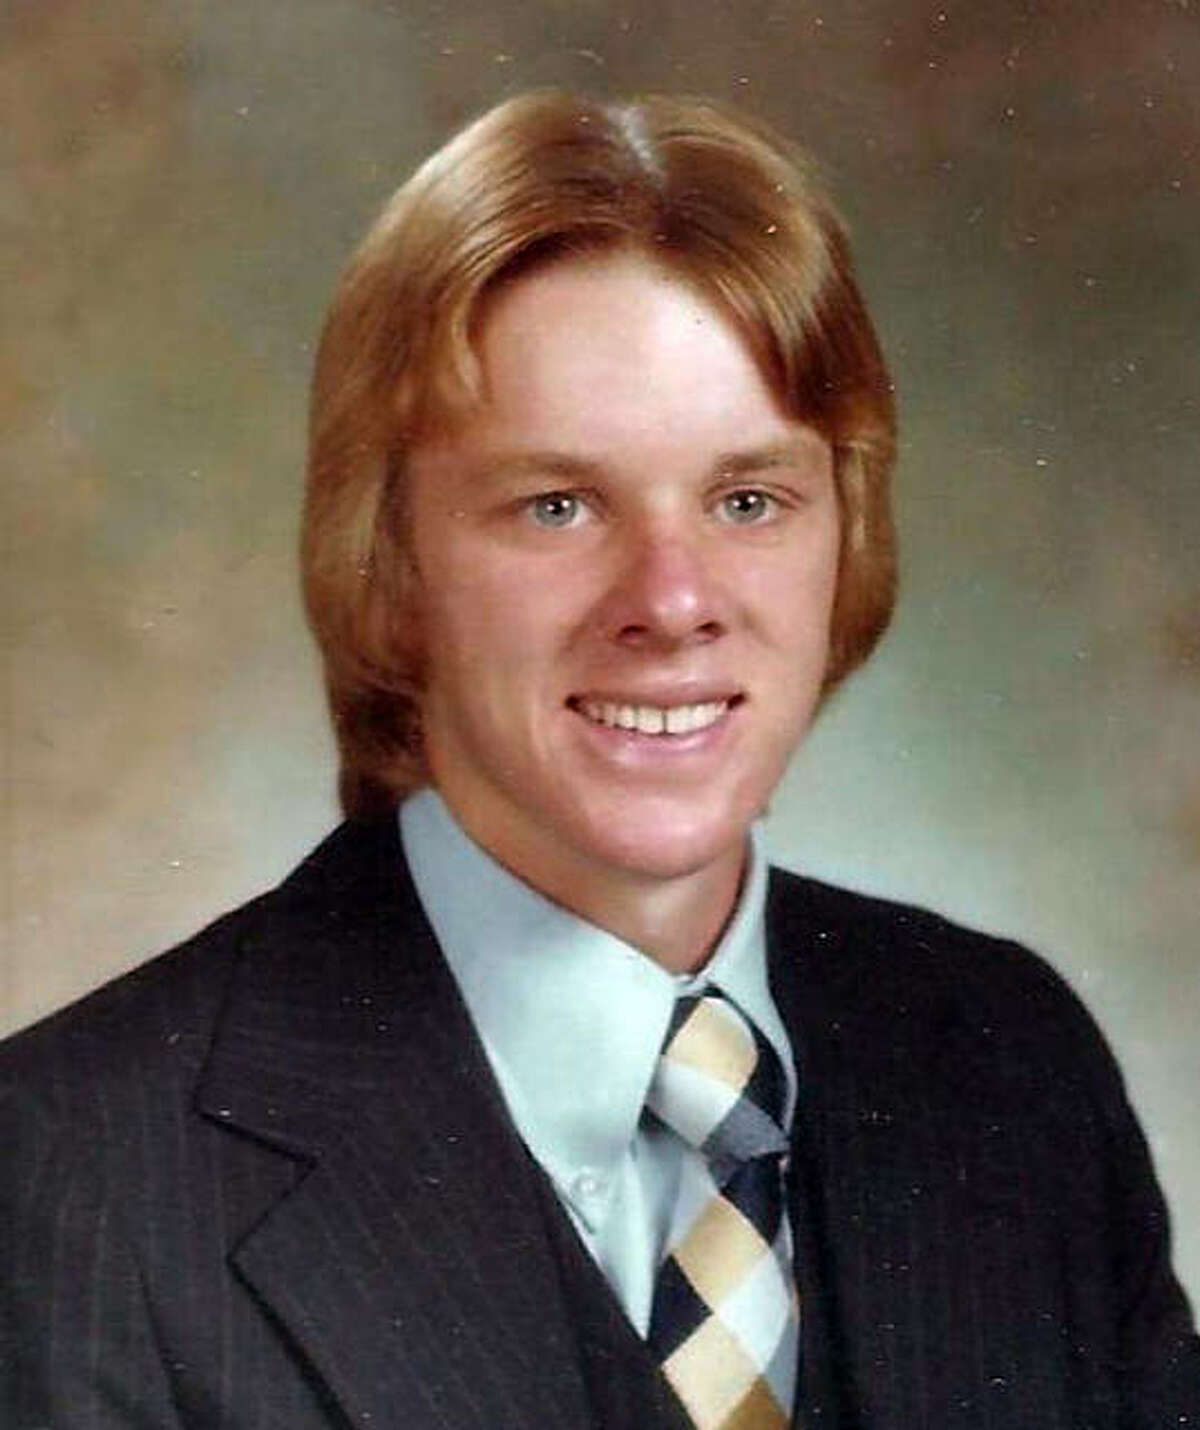 A high school graduation photo of Edwardsville’s Joe Malench from 1978.